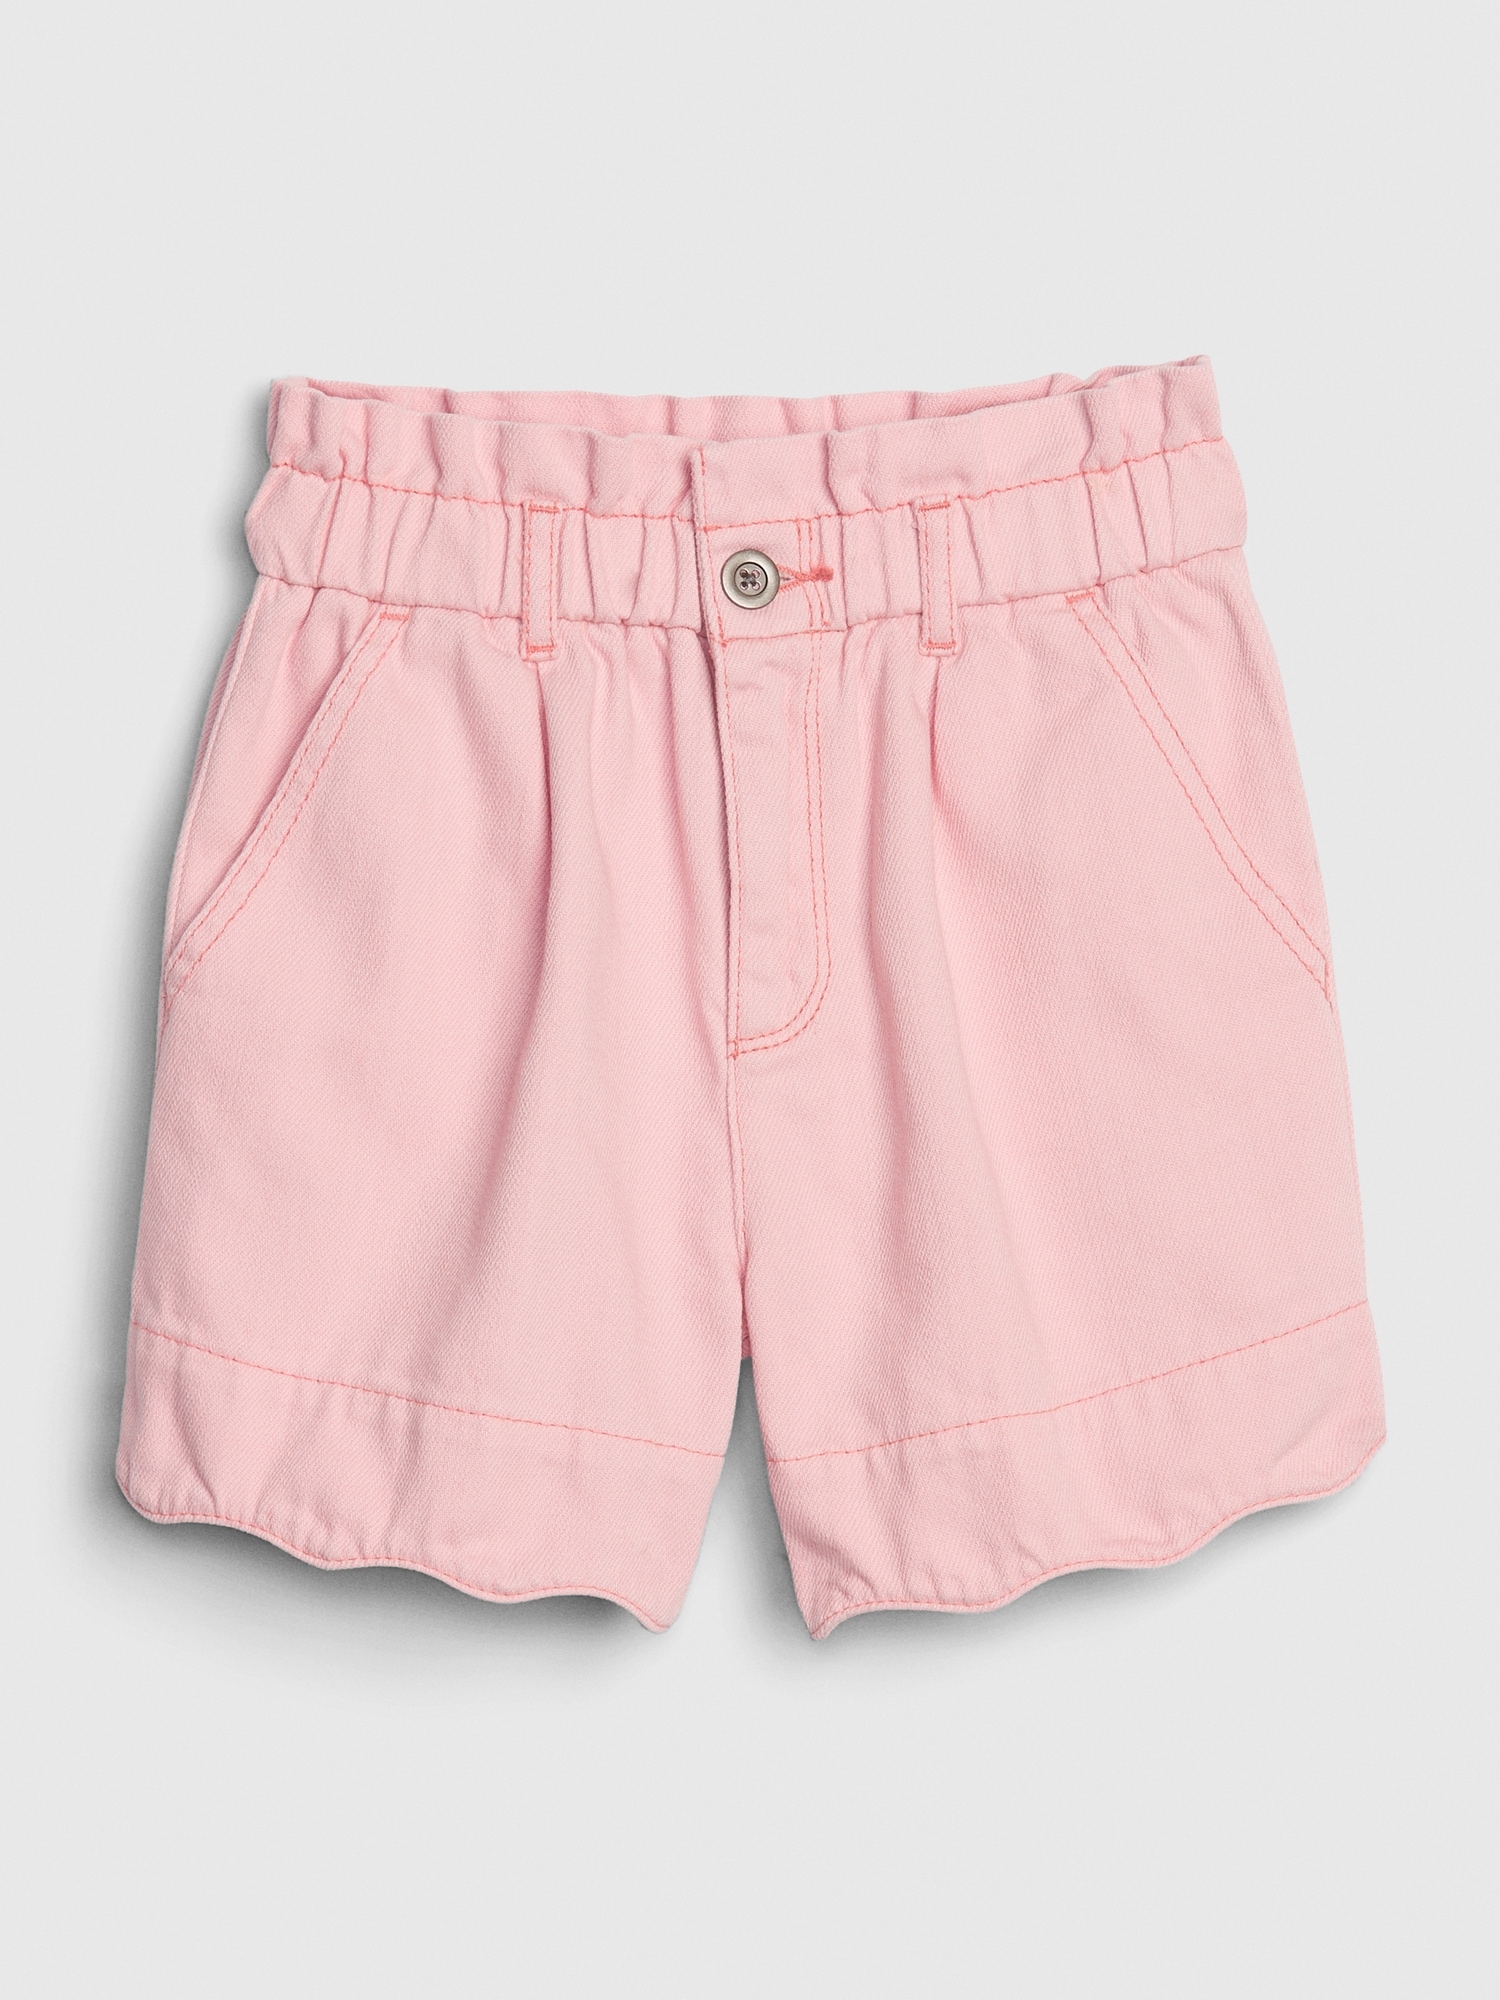 High Waisted Shorts Pink Hotsell, 58% OFF | www.ingeniovirtual.com